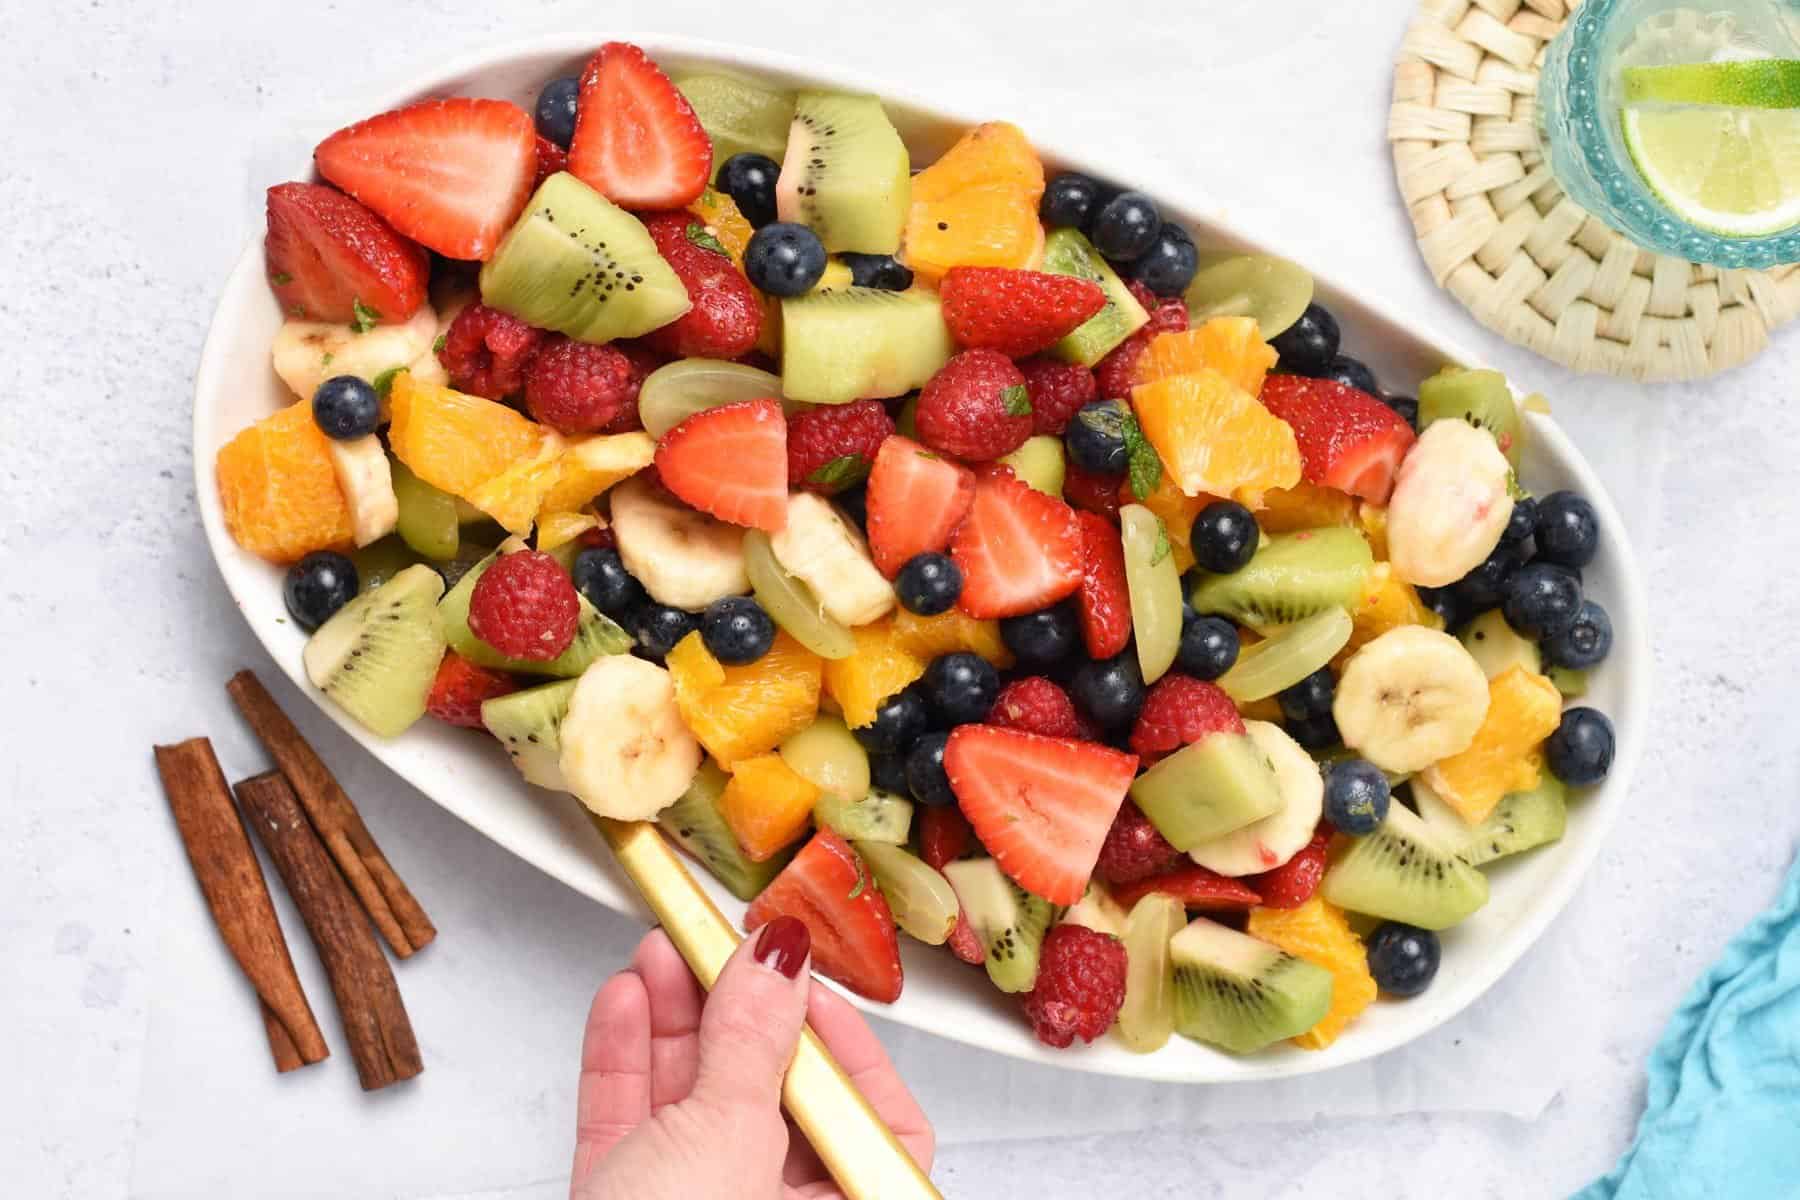 https://www.theconsciousplantkitchen.com/wp-content/uploads/2022/05/Breakfast-Fruit-Salad-1-rotated.jpg